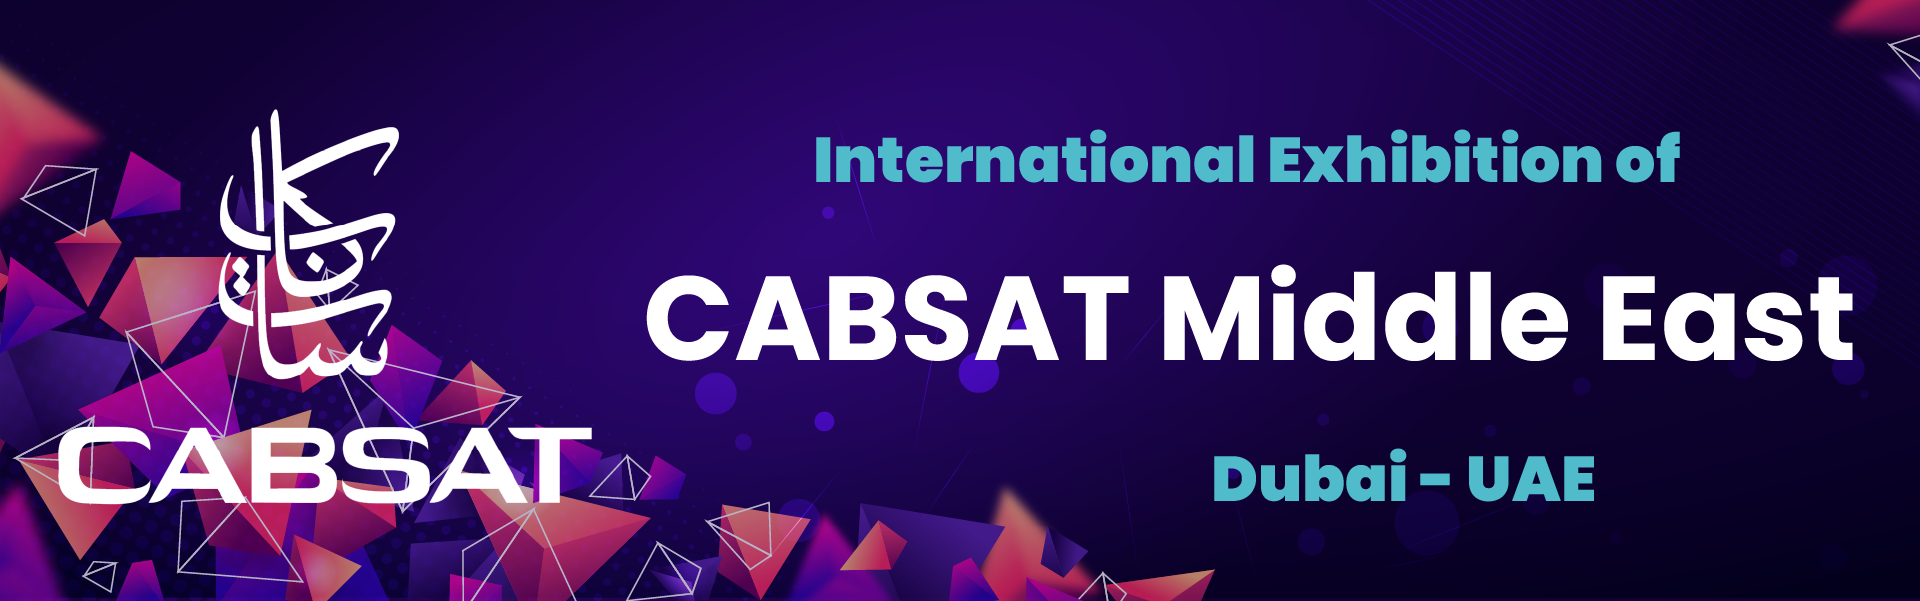 CABSAT Middle East Exhibition Dubai United Arab Emirates